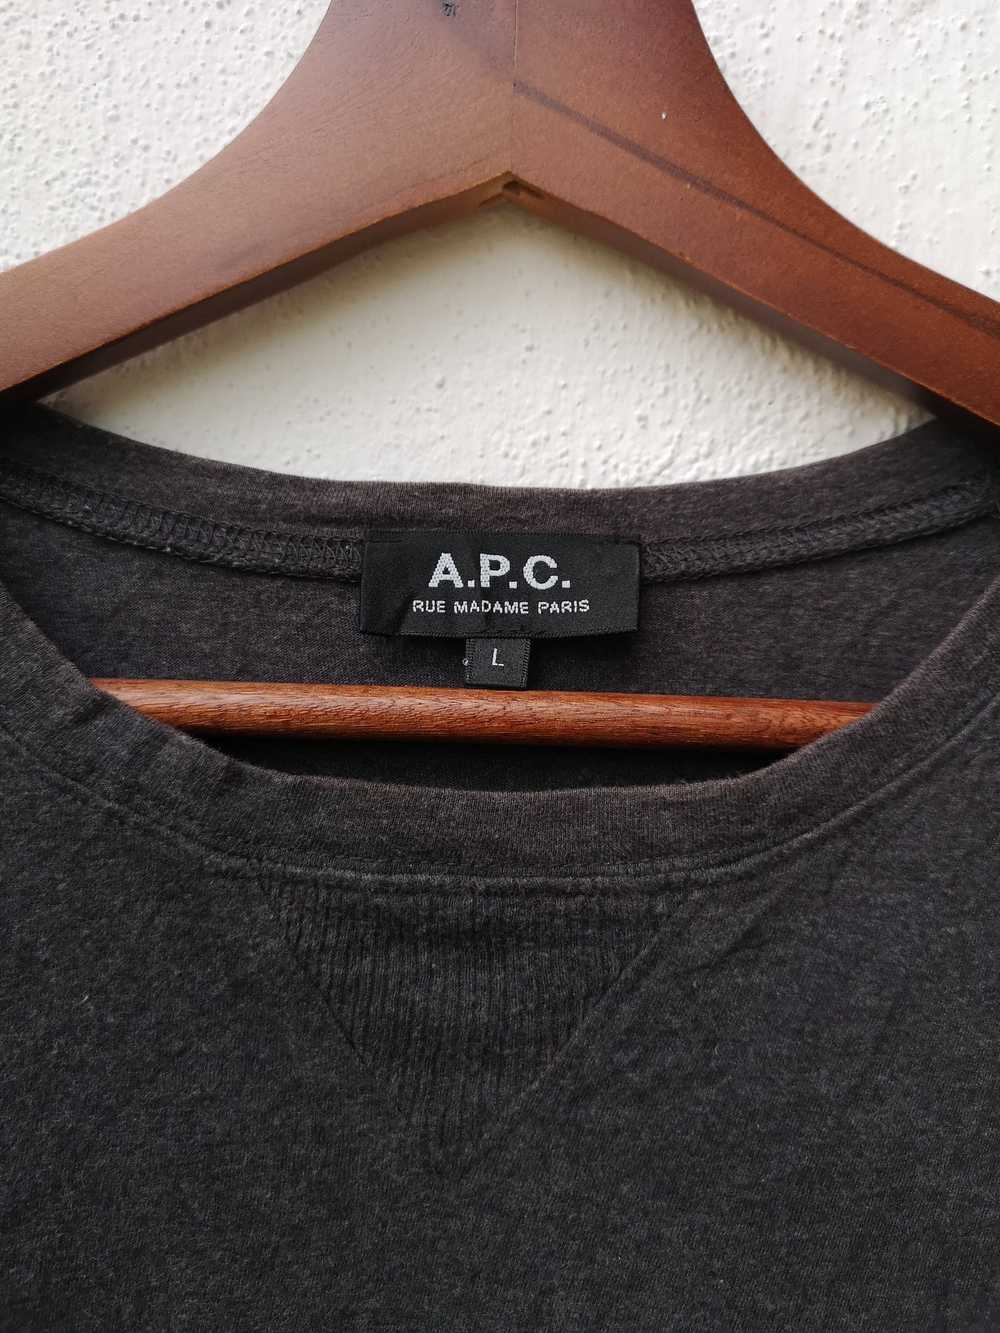 A.P.C. × Japanese Brand A. P. C Tshirt - image 3